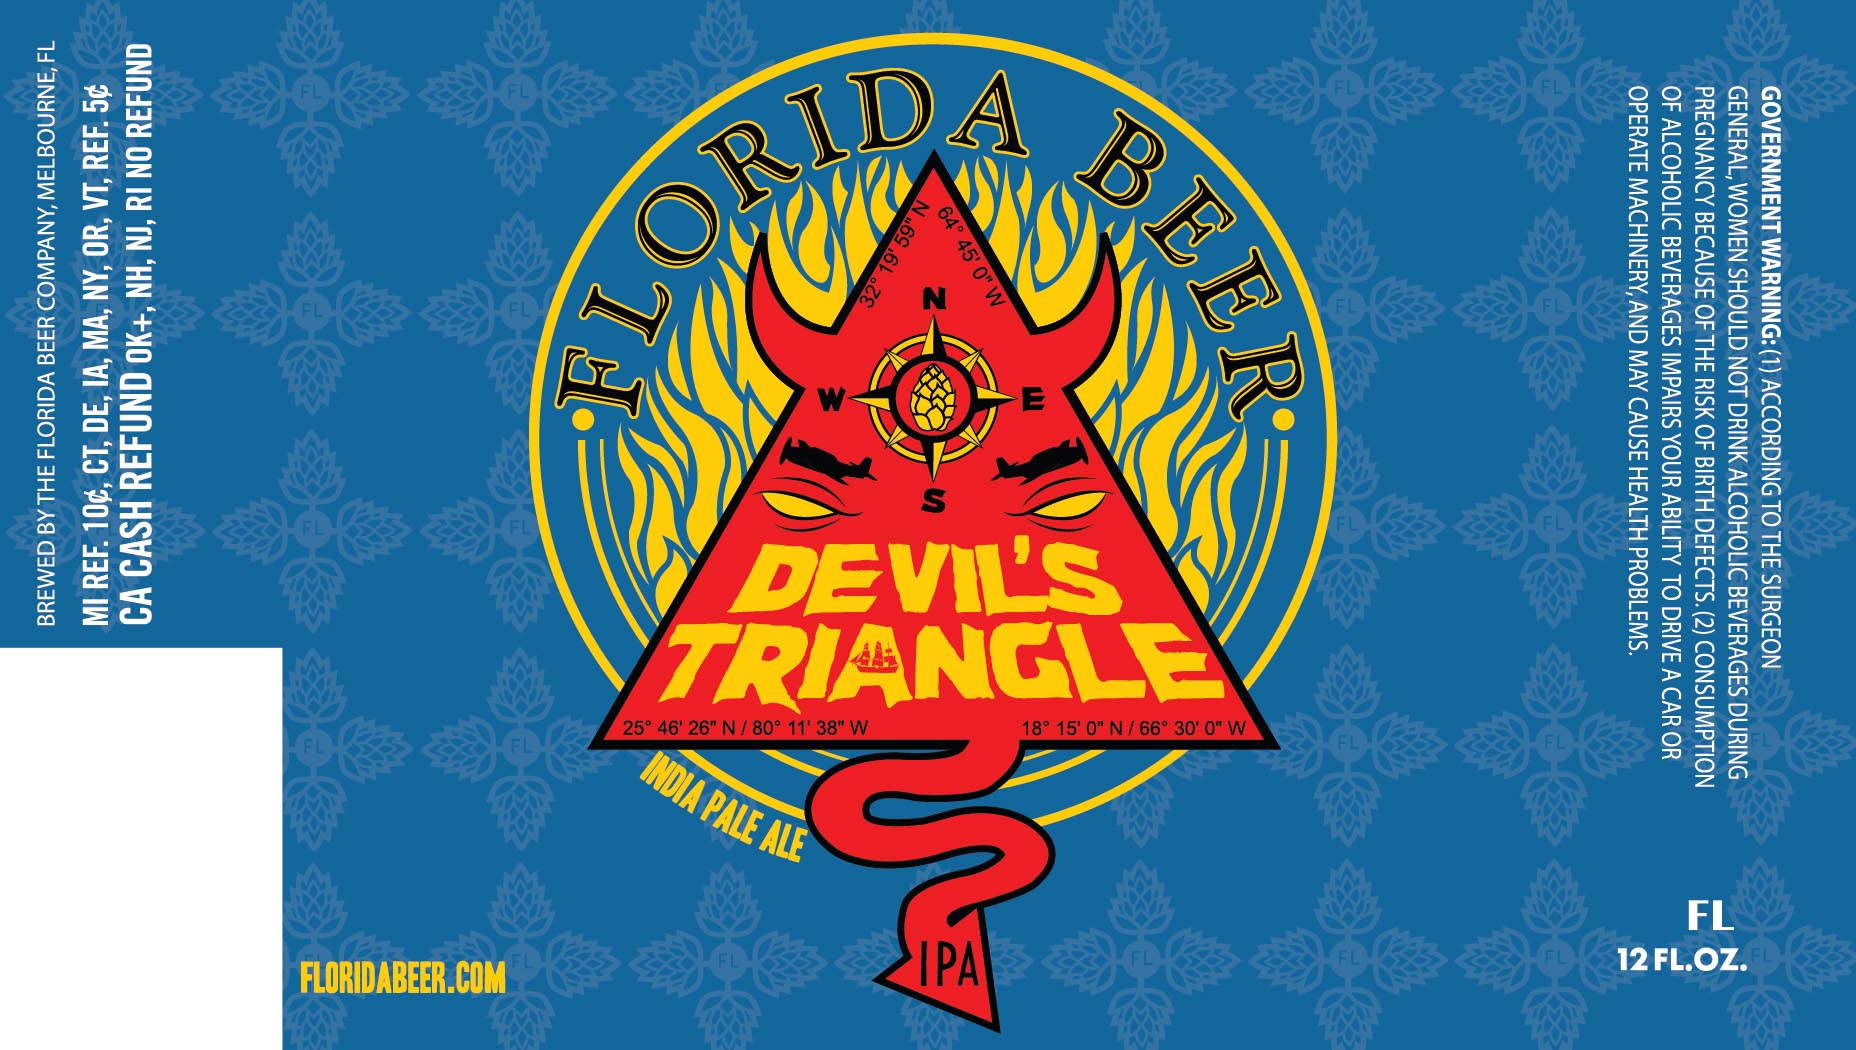 Florida Beer Devils Triangle